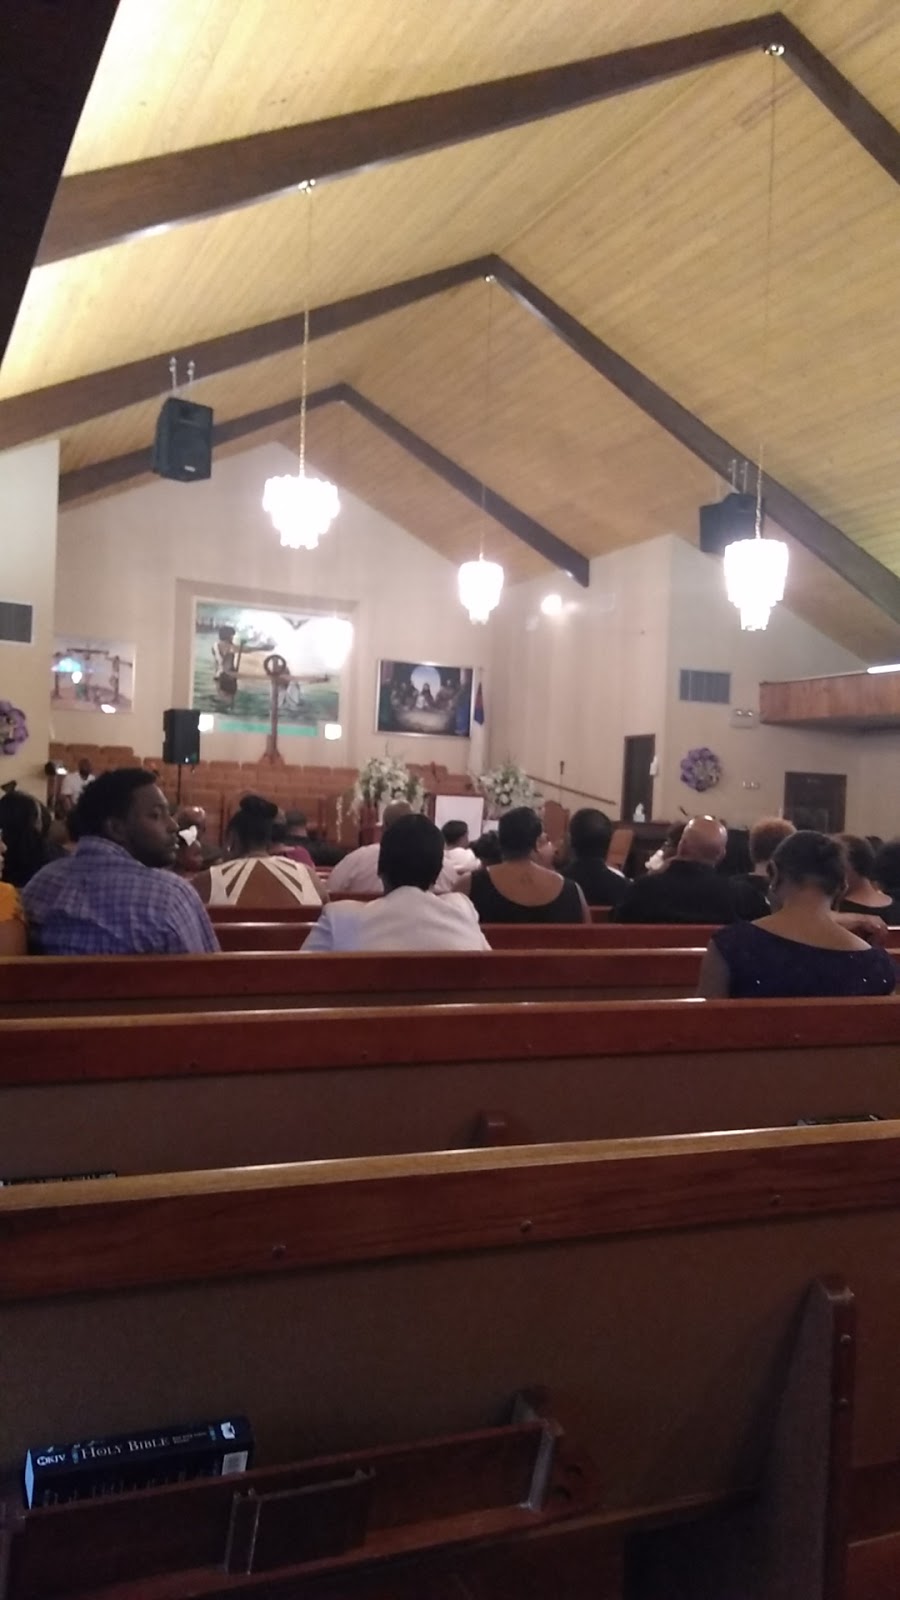 New Light Missionary Baptist Church | 650 Blount Rd, Baton Rouge, LA 70807, USA | Phone: (225) 775-3696